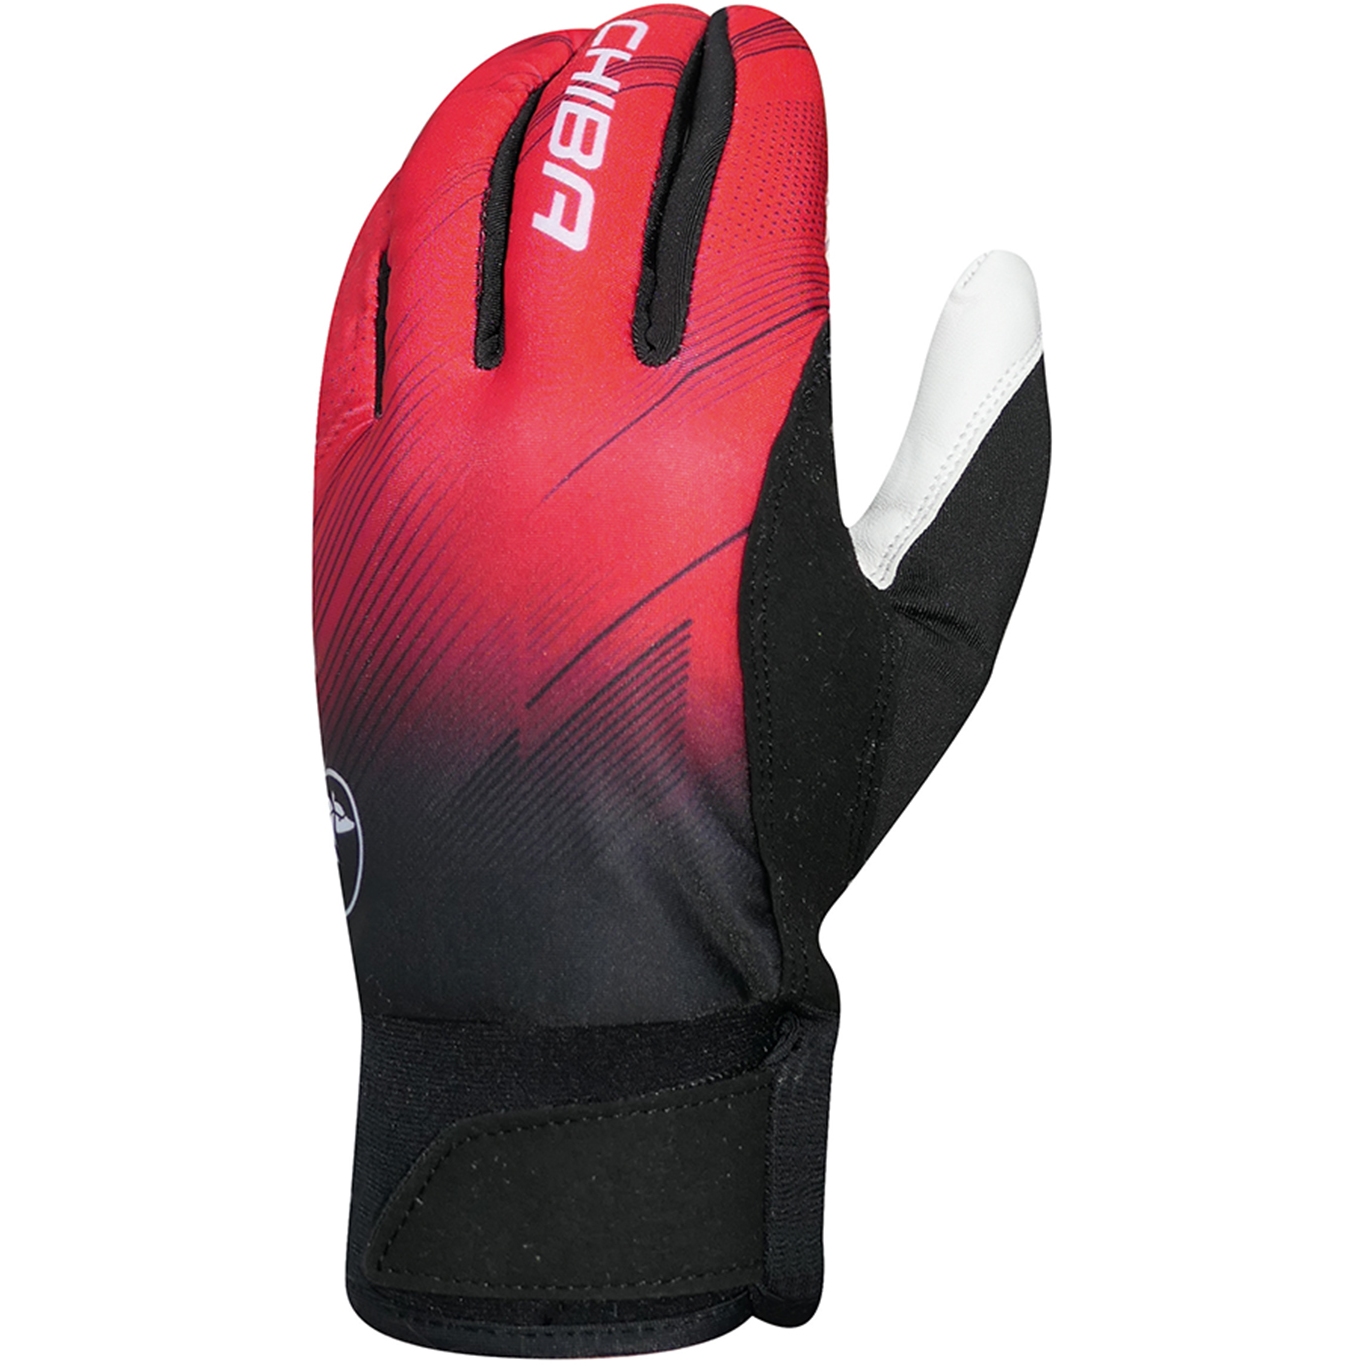 Image of Chiba Nordic Pro Warm Ski Gloves - red